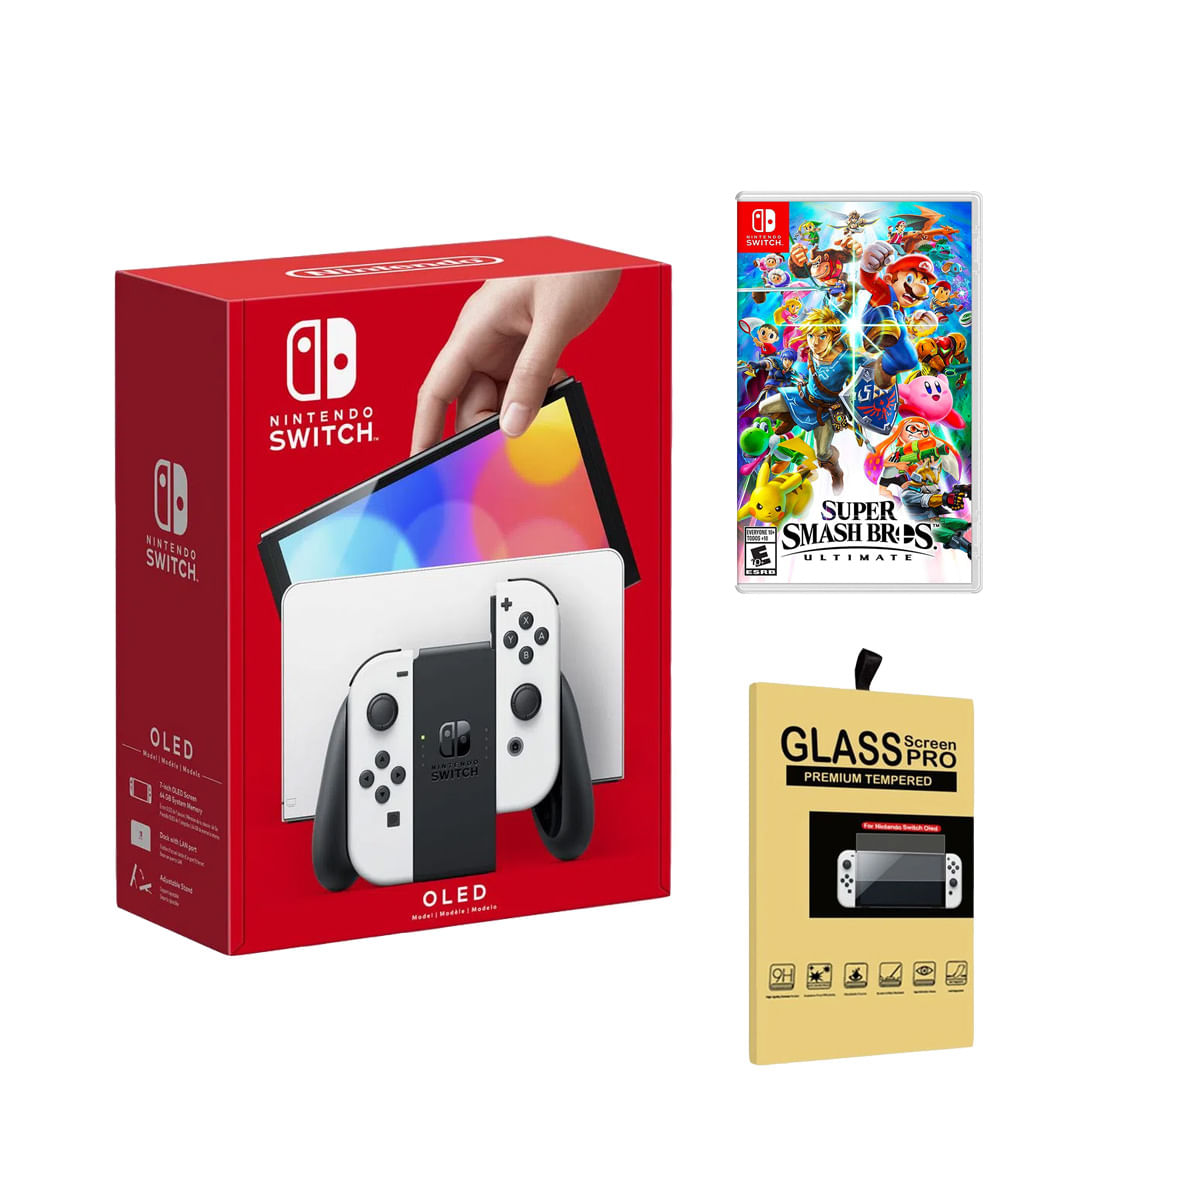 Consola Nintendo Switch Oled Blanco + Super Smash Bros + Mica